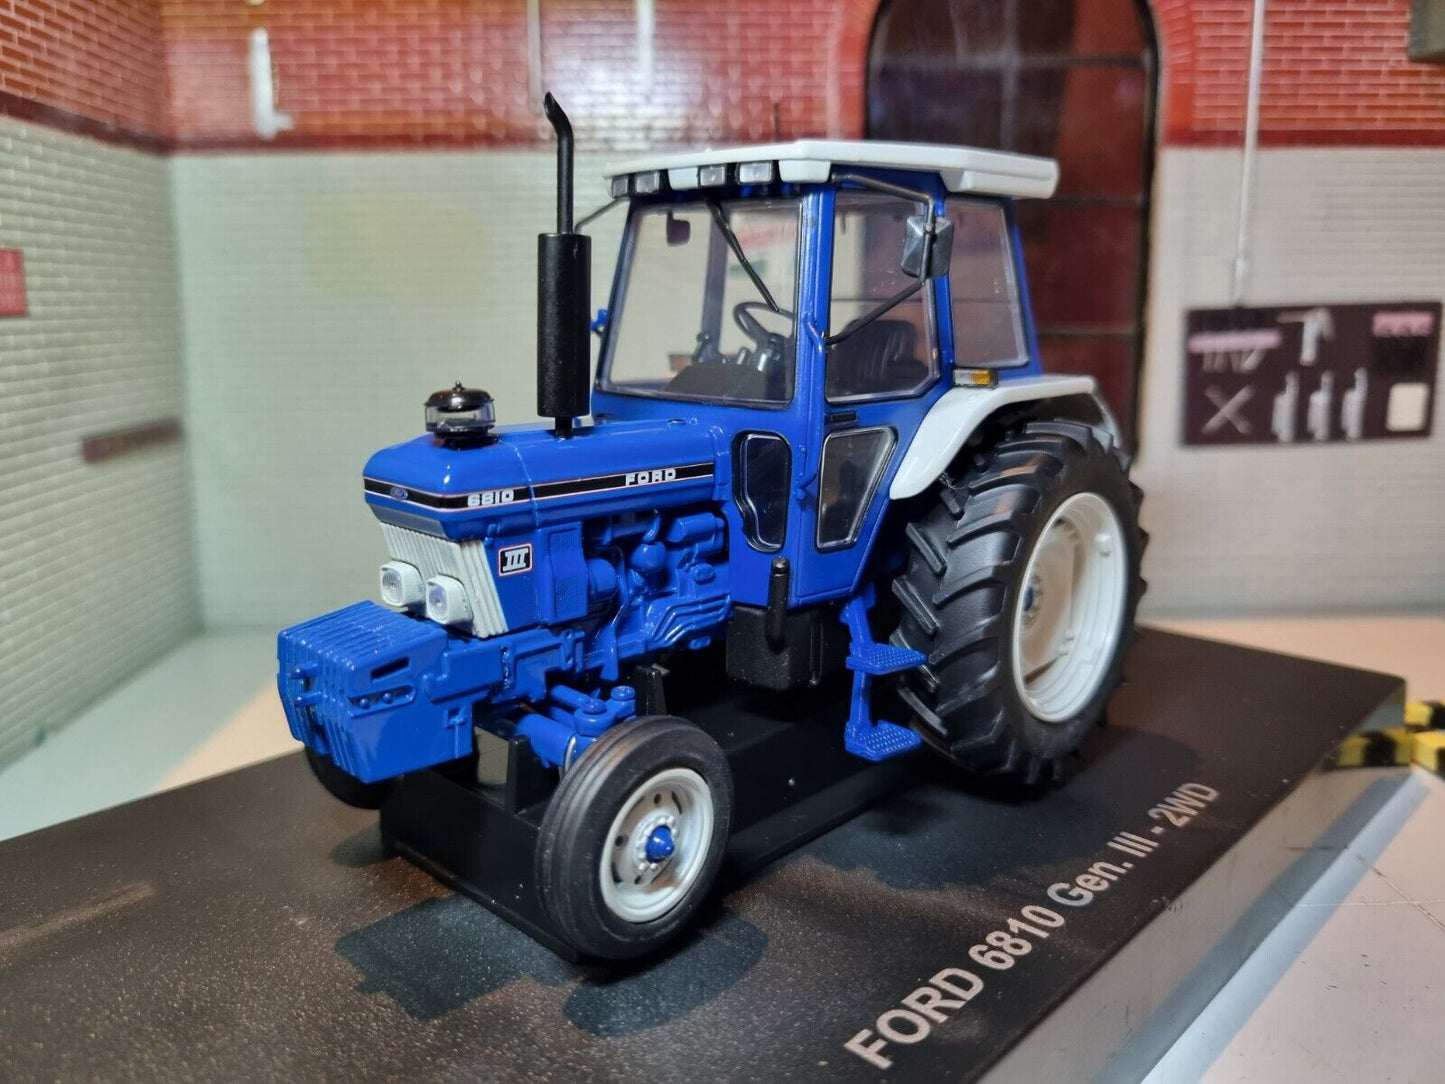 Ford 6810 Gen 3 2WD 1988-1991 Tractor 43308 Universal Hobbies 1:32